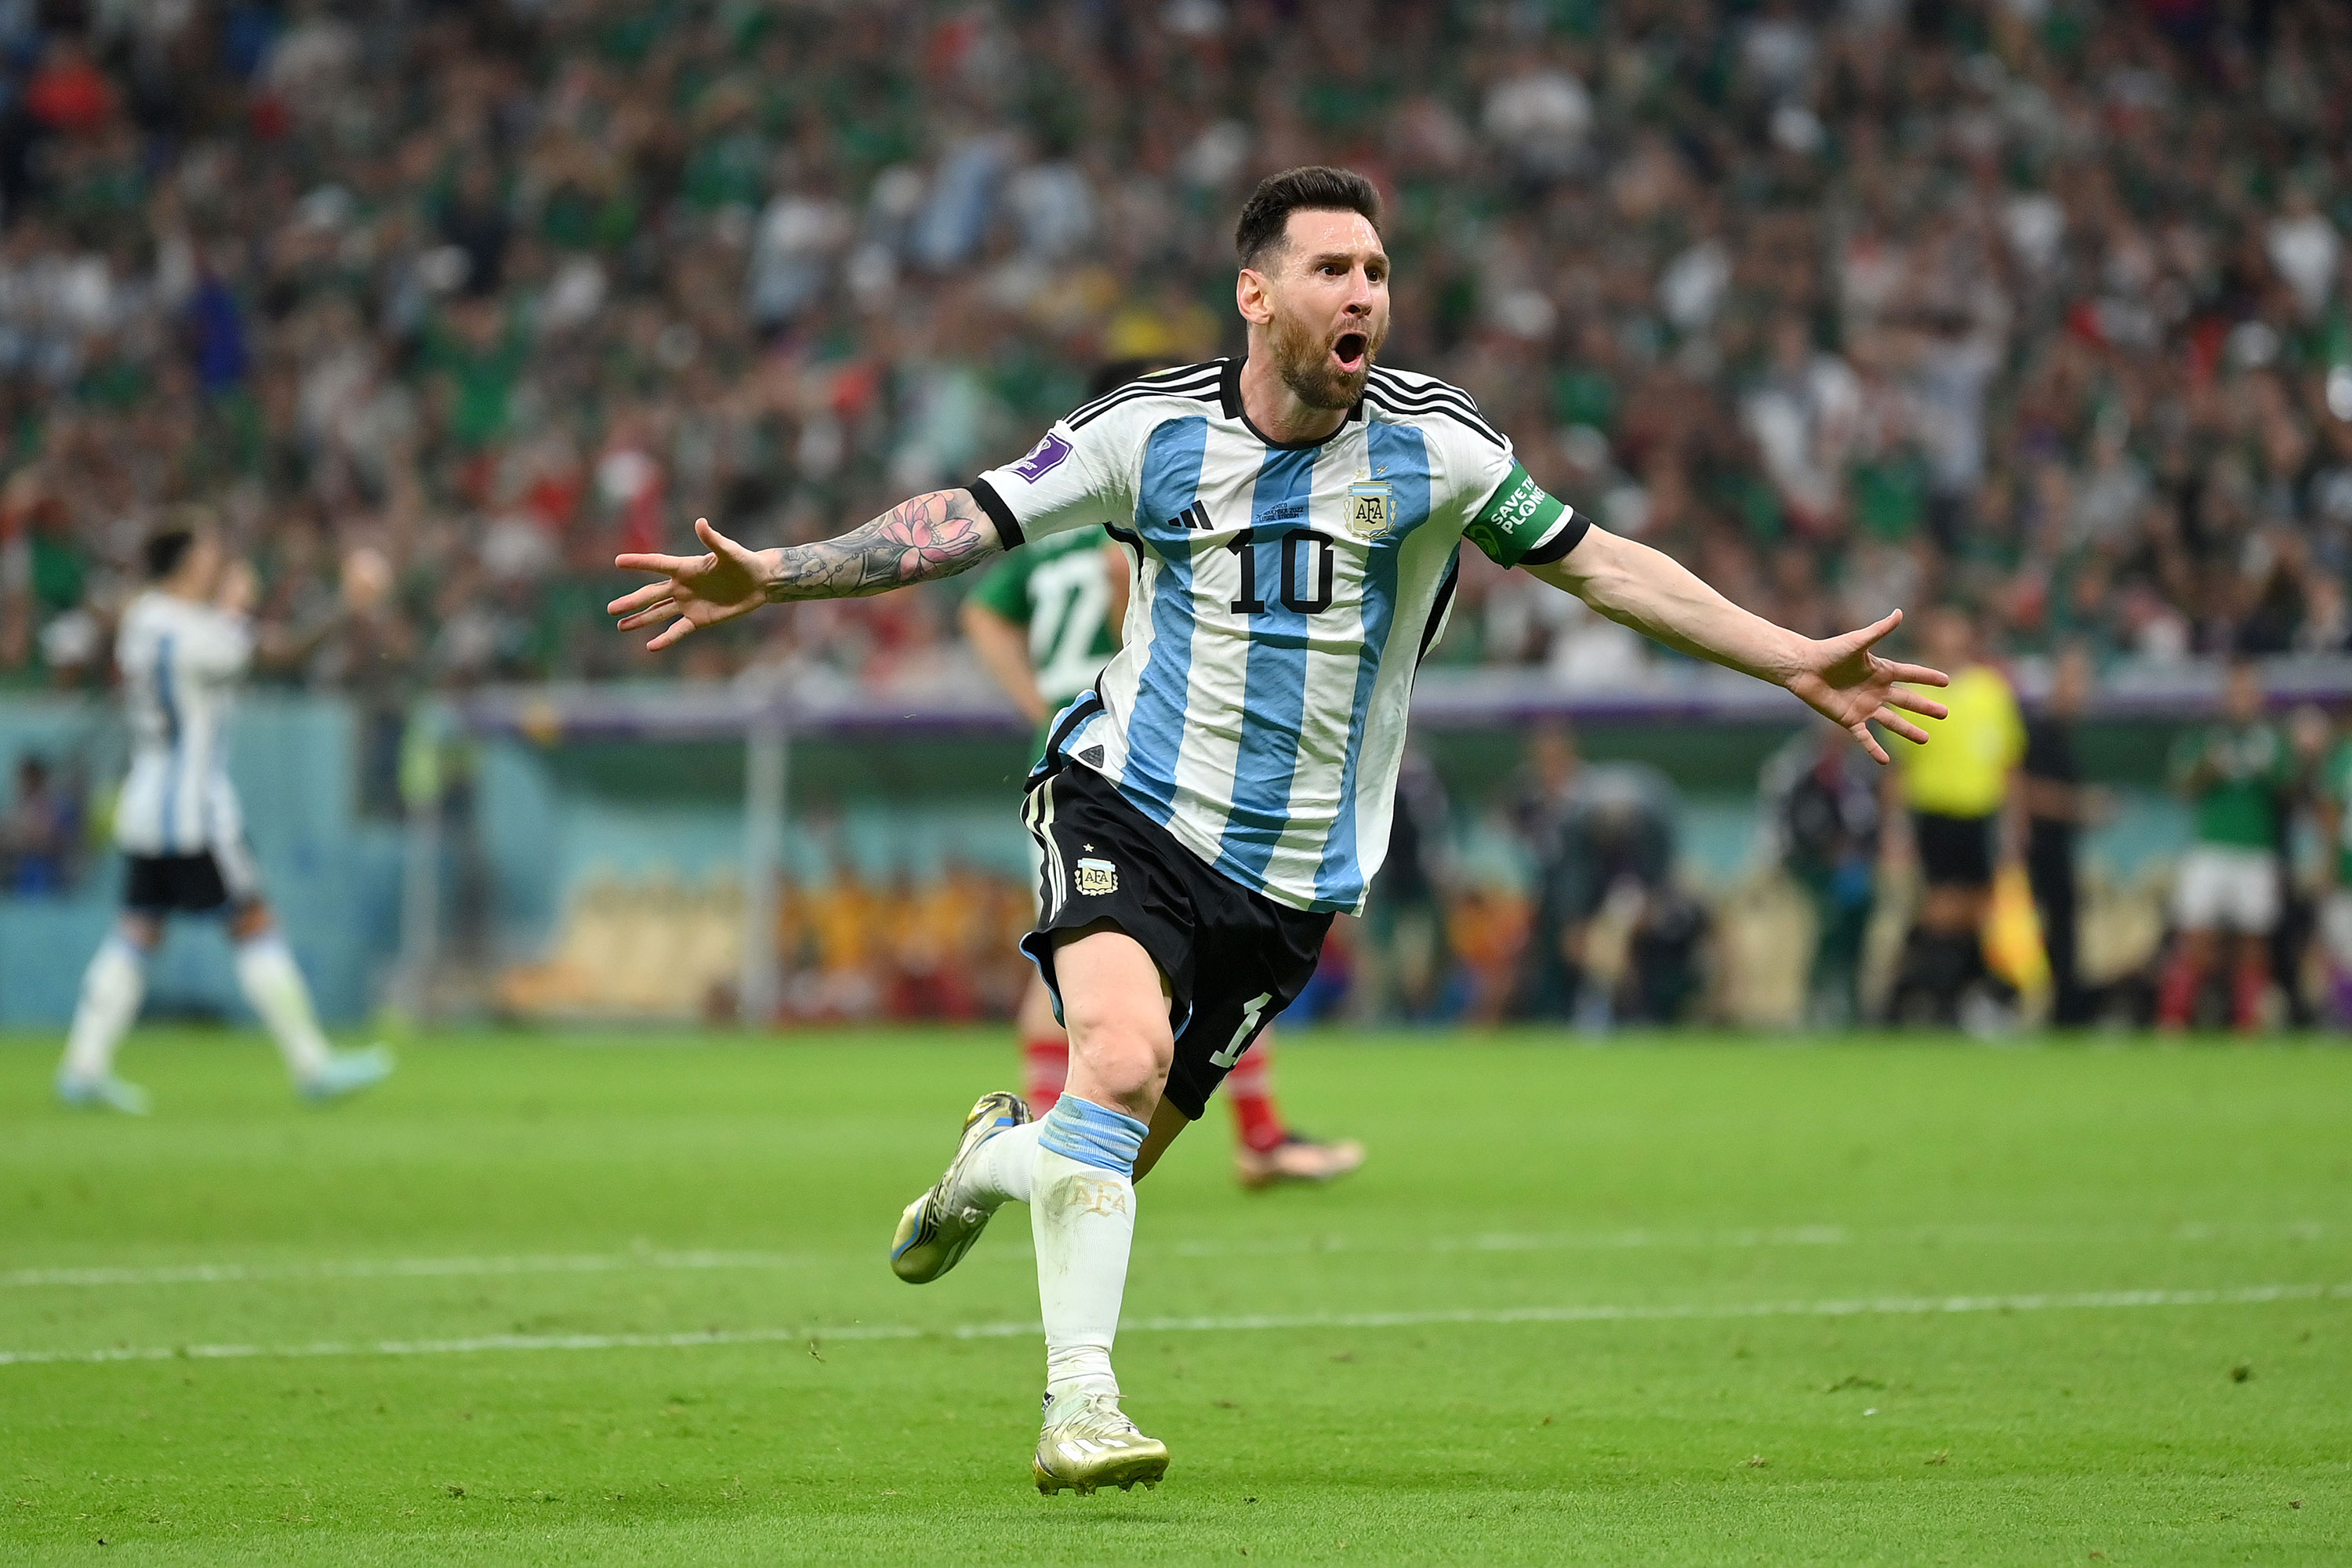 Lionel Messi celebrates scoring a goal against Mexico on Saturday.